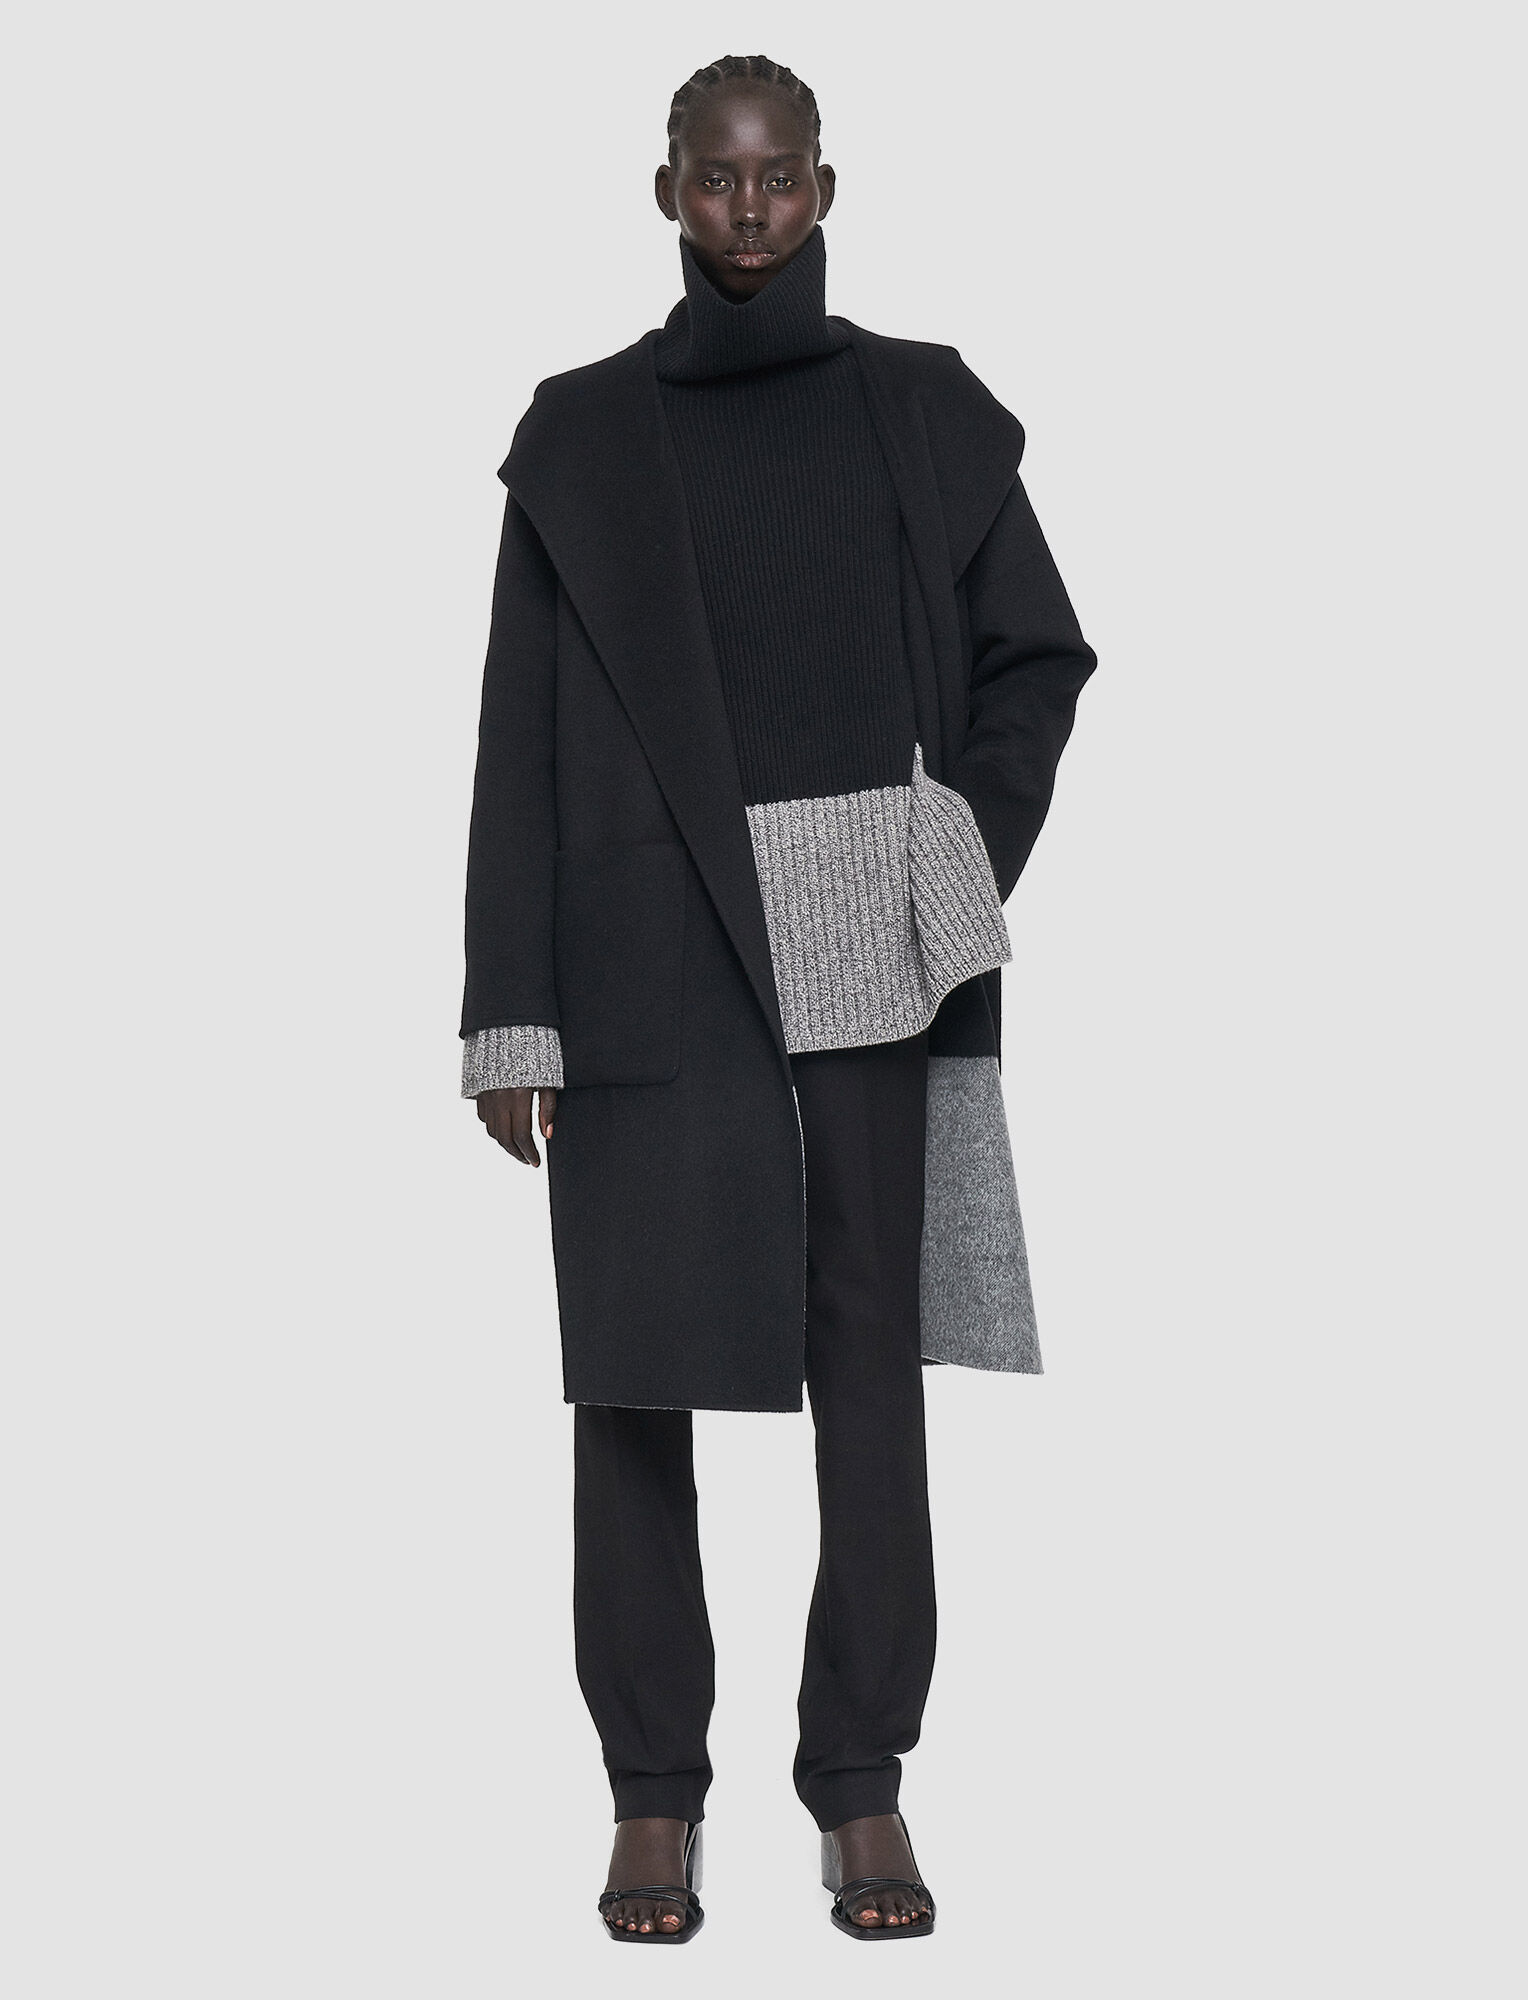 Joseph, Reversible Double Face Colour Block Aga Coat, in Black/Grey